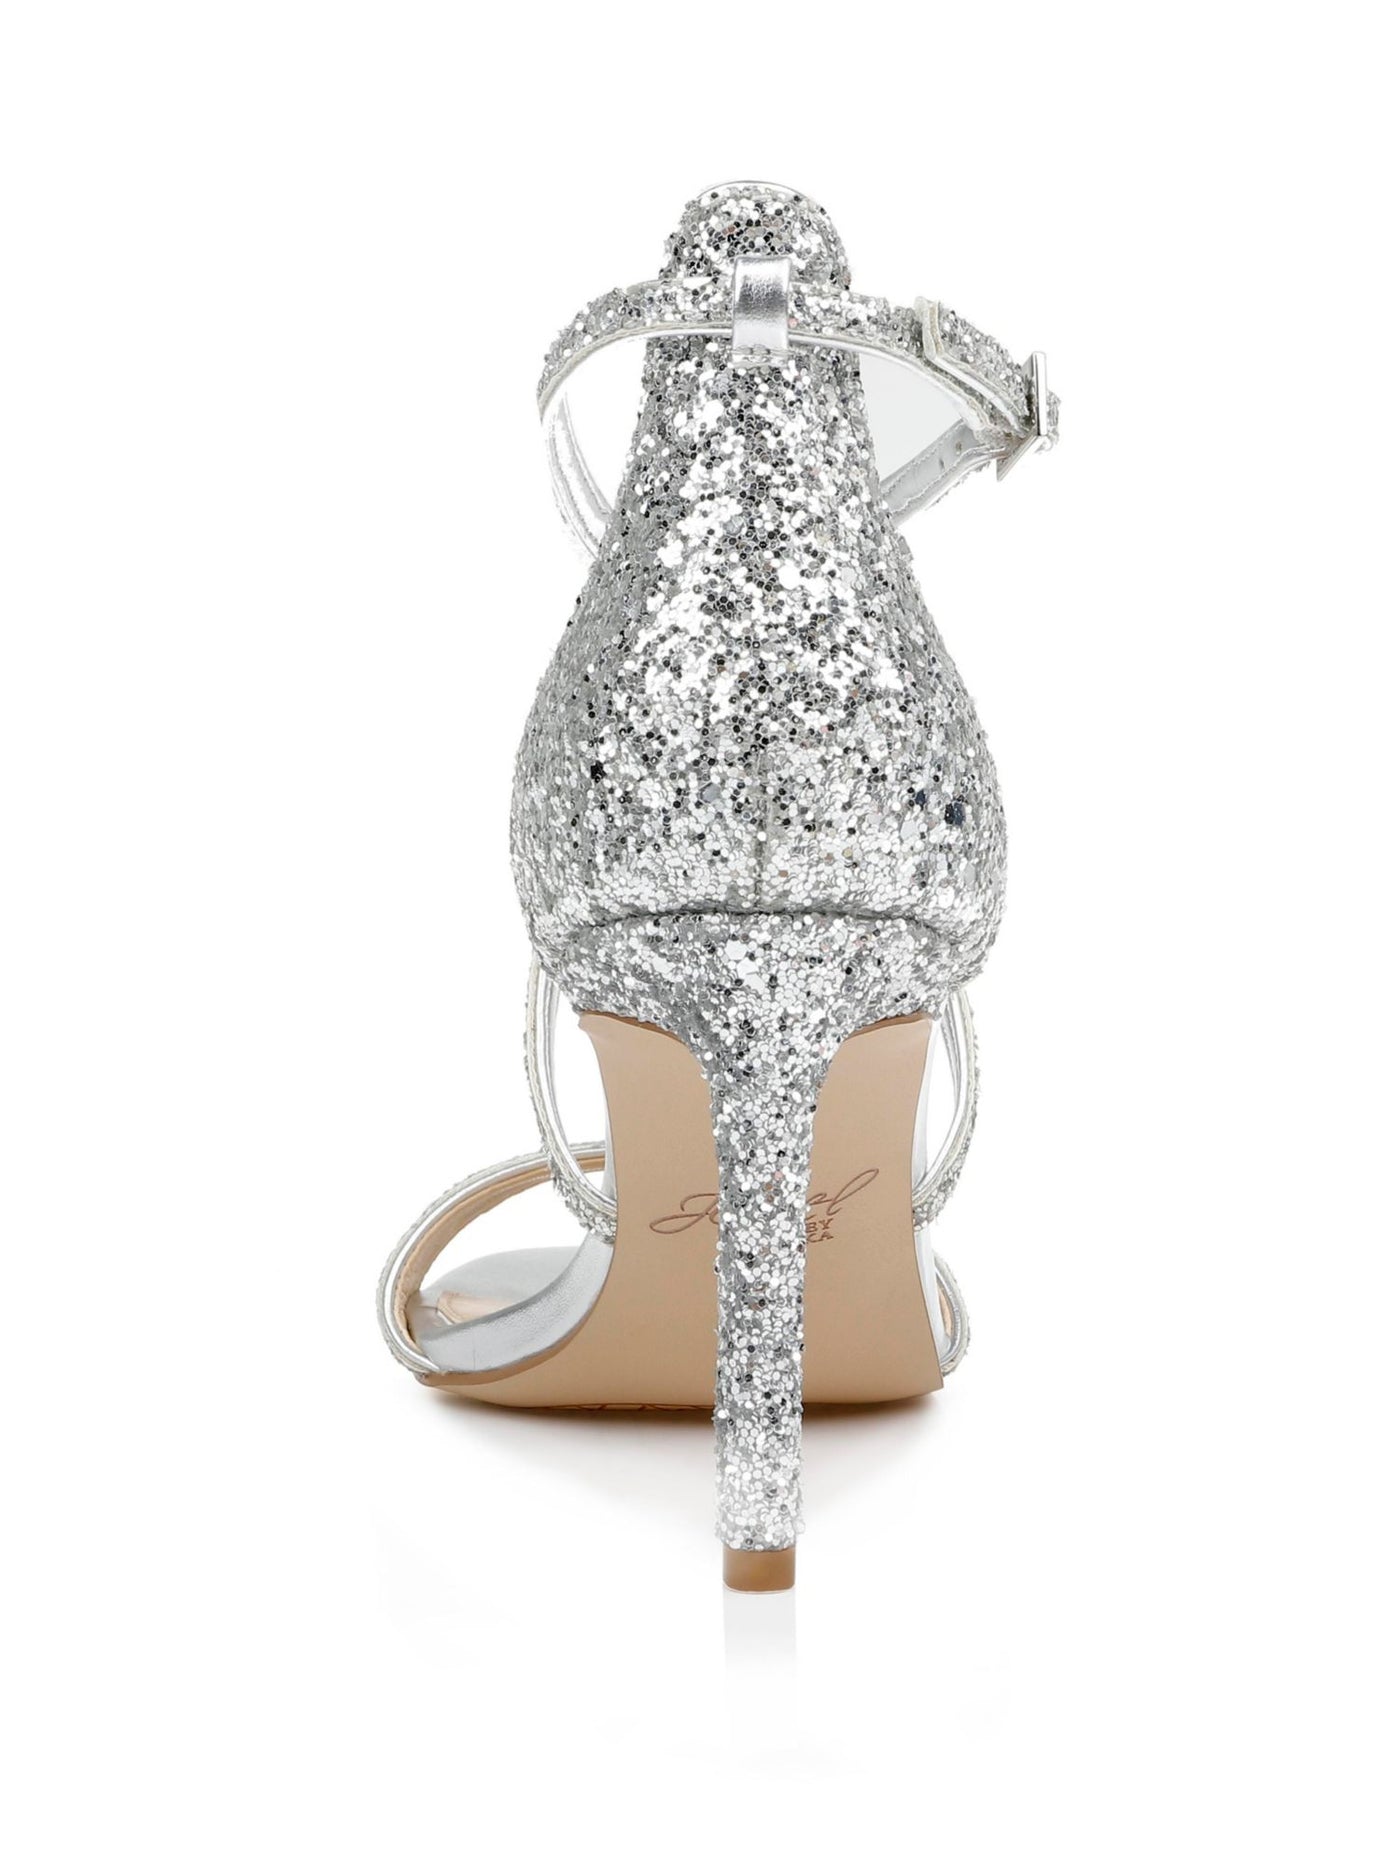 JEWEL BADGLEY MISCHKA Womens Silver Strappy Dimitra Round Toe Stiletto Buckle Dress Heeled Sandal 6.5 M